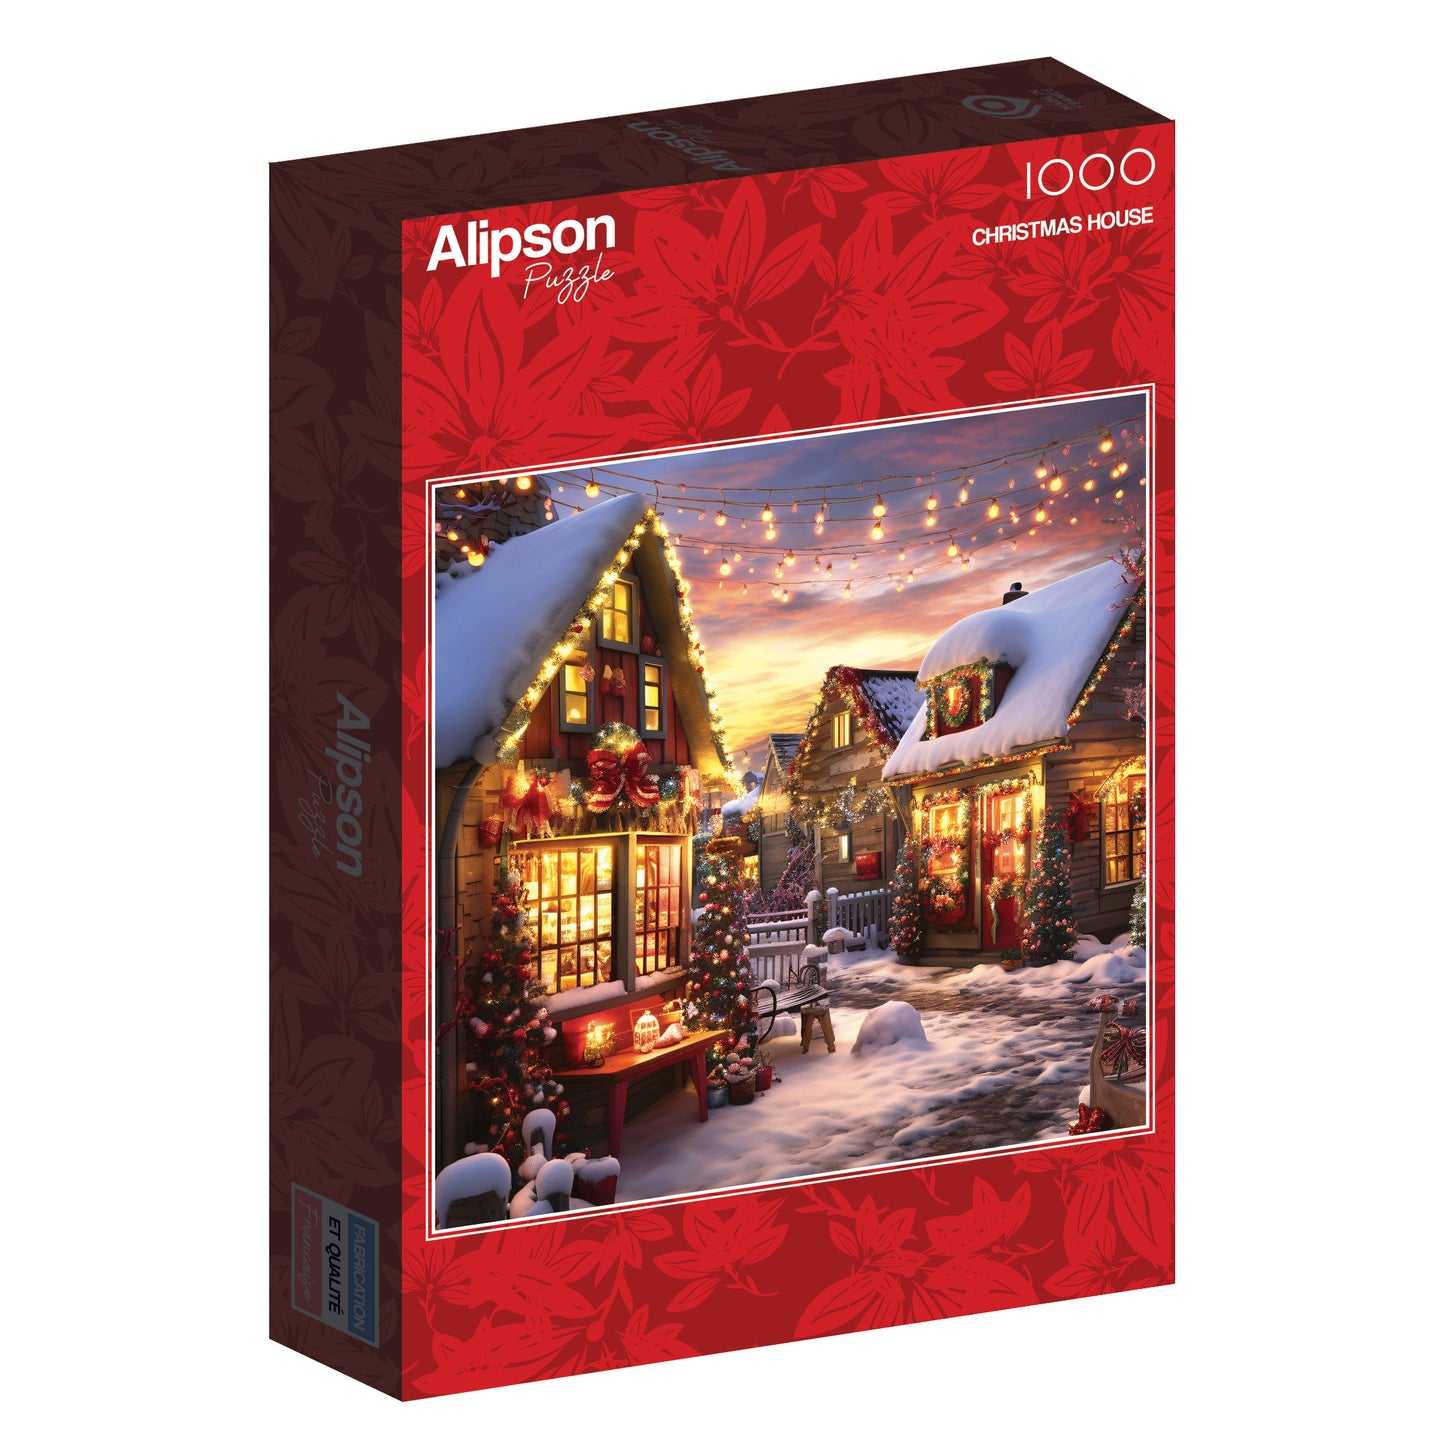 Alipson - Christmas House - 1000 Piece Jigsaw Puzzle